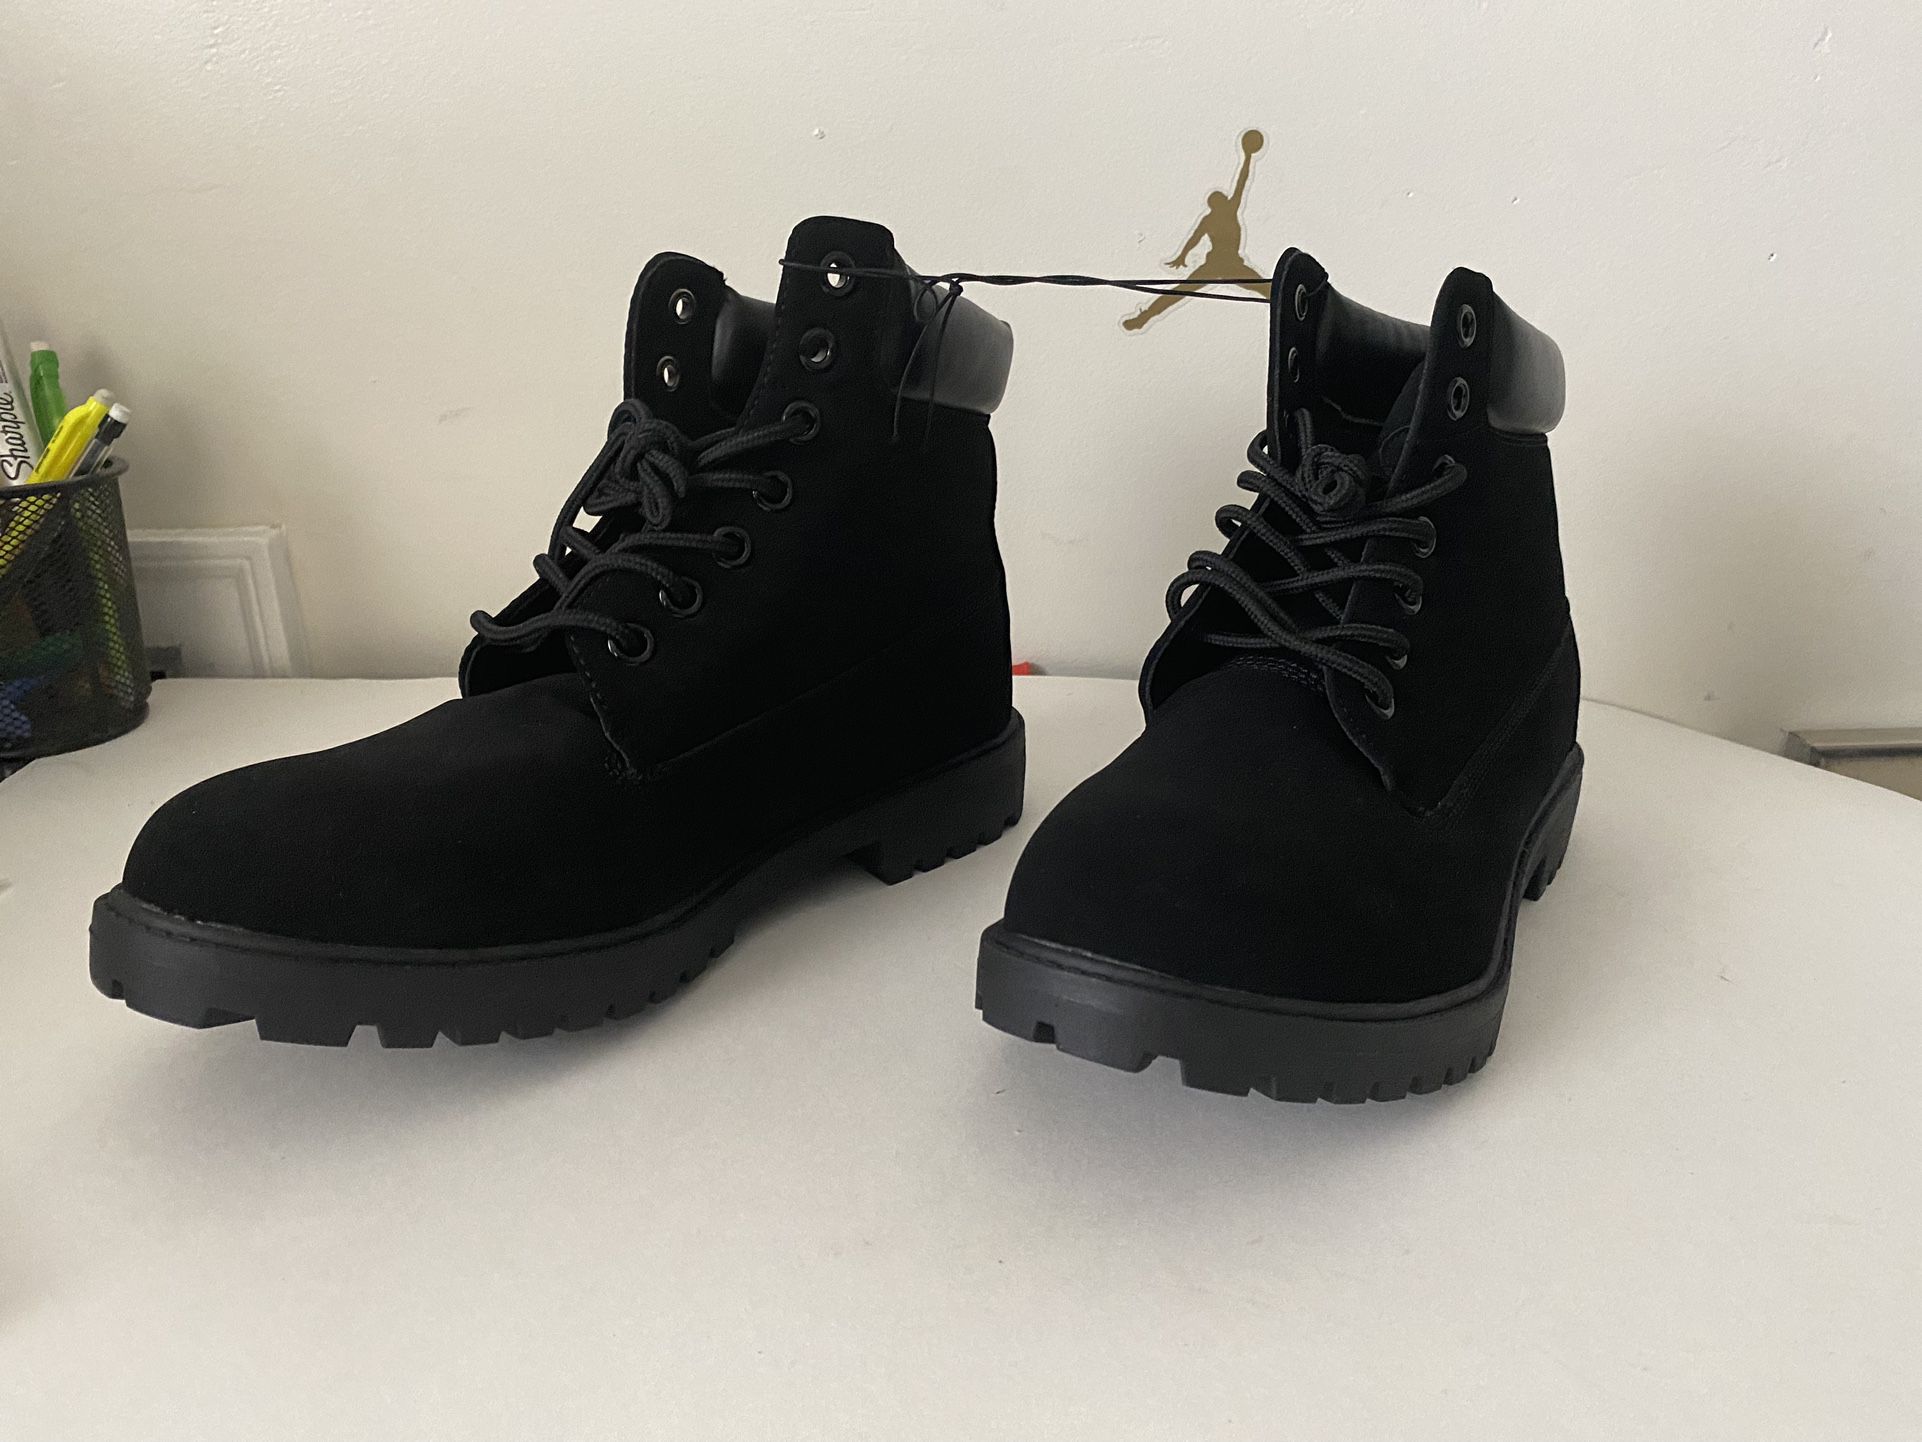 EpicStep Men’s Premium Boots work ( Pick Up Only)